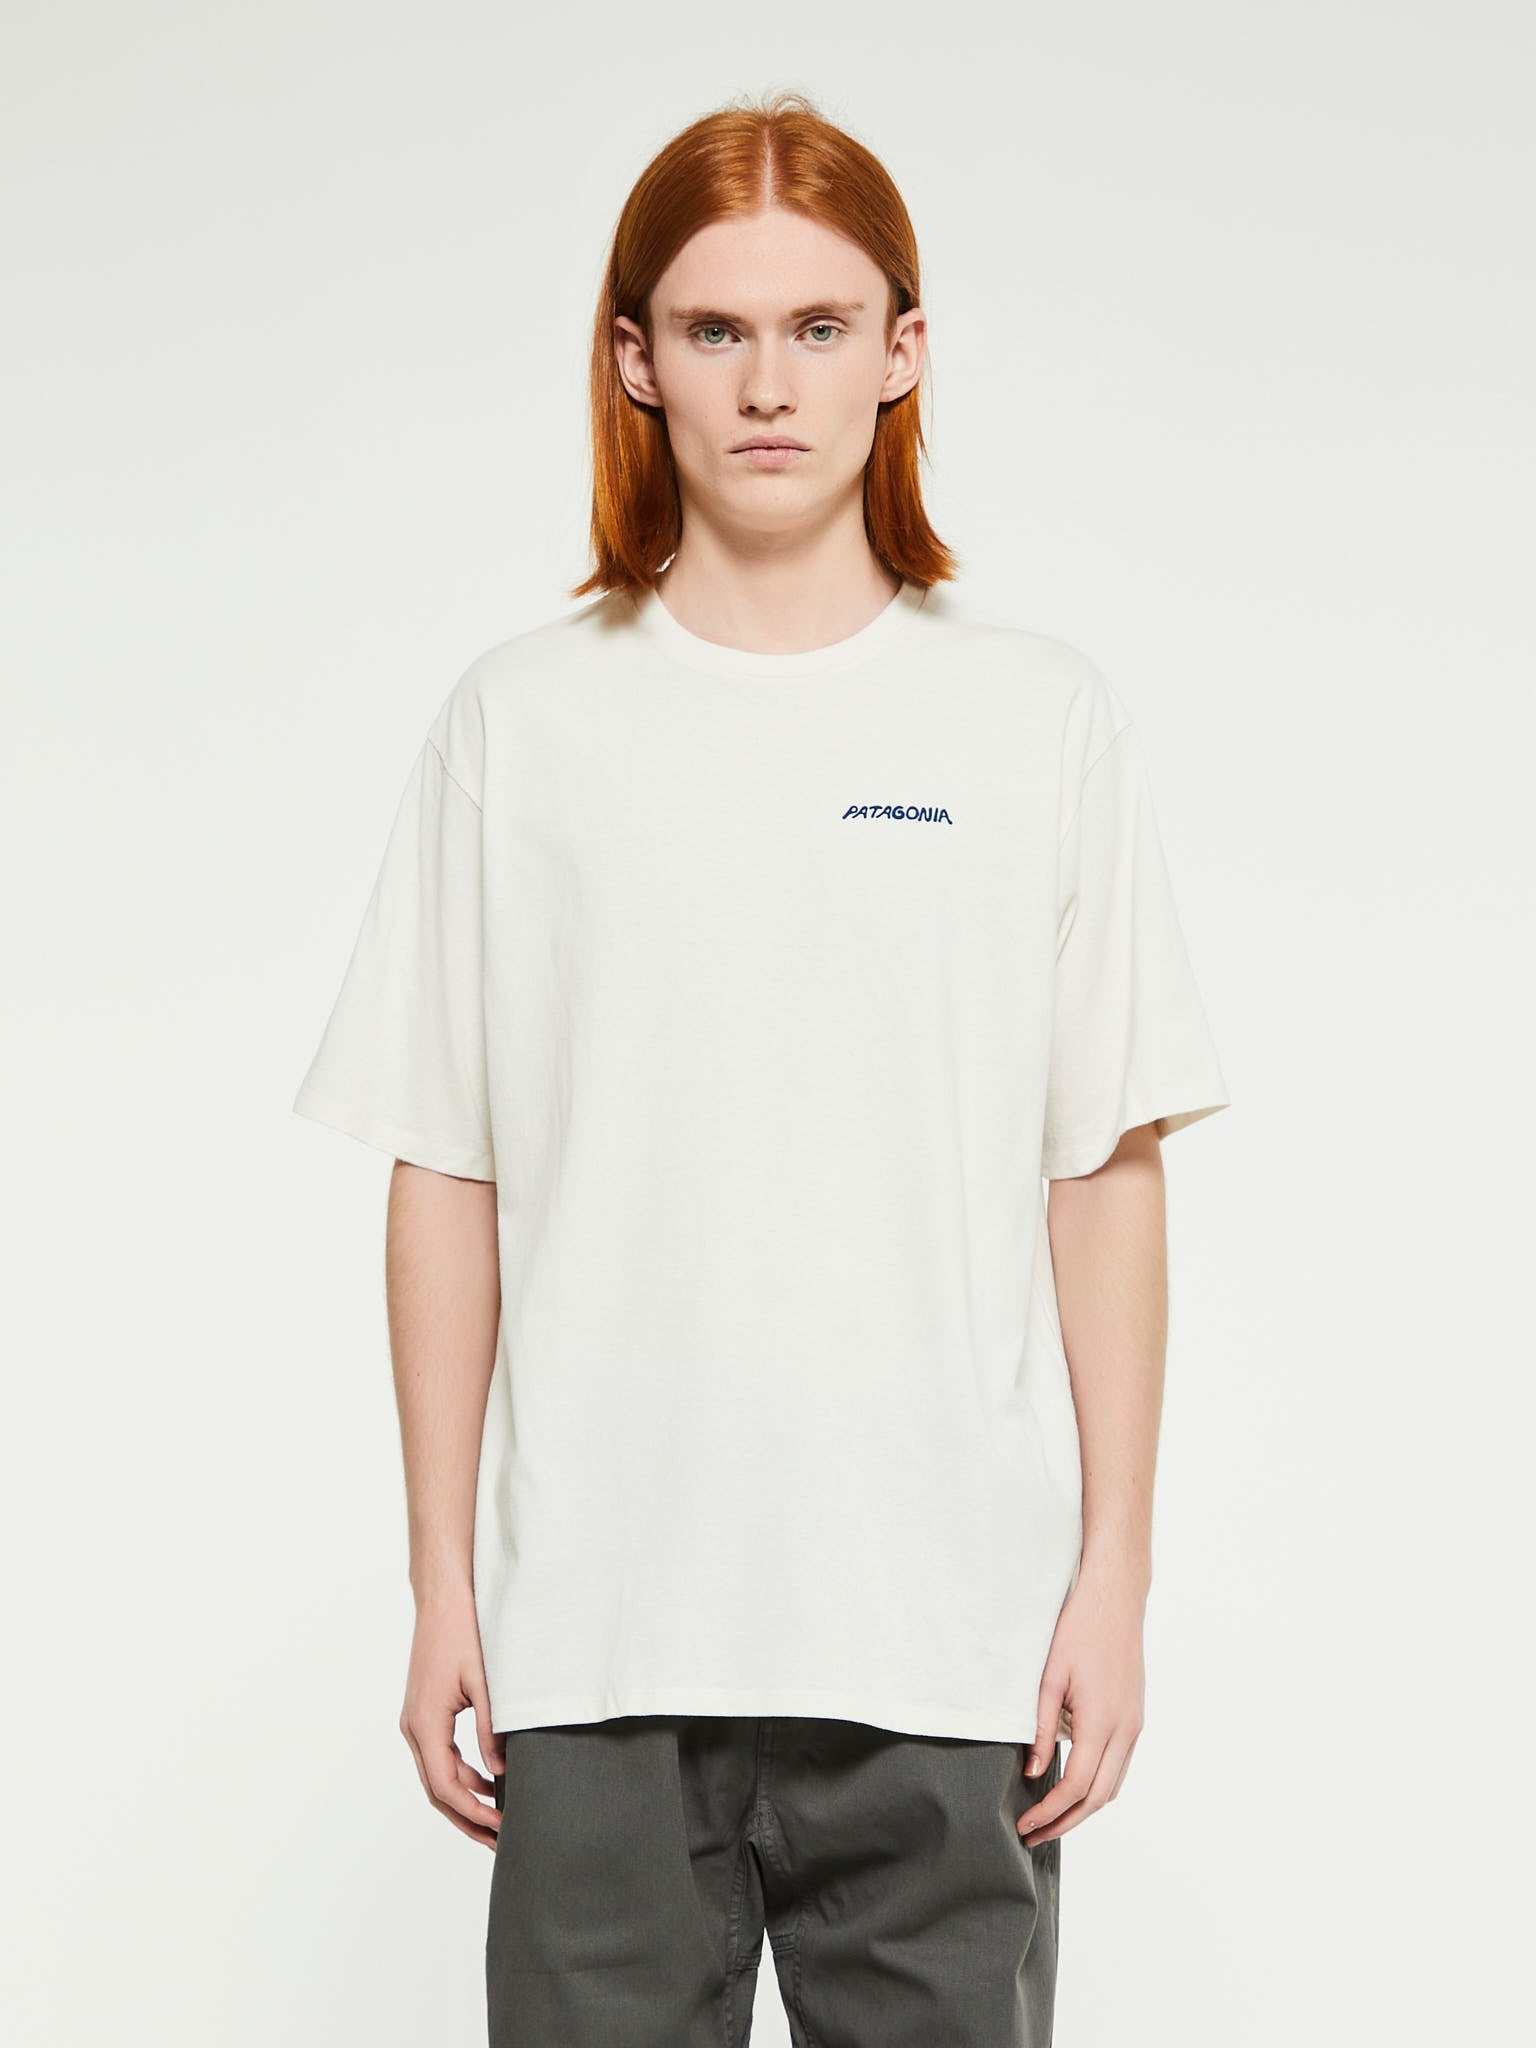 Patagonia - Sunrise Rollers Responsibili-Tee T-Shirt in Birch White